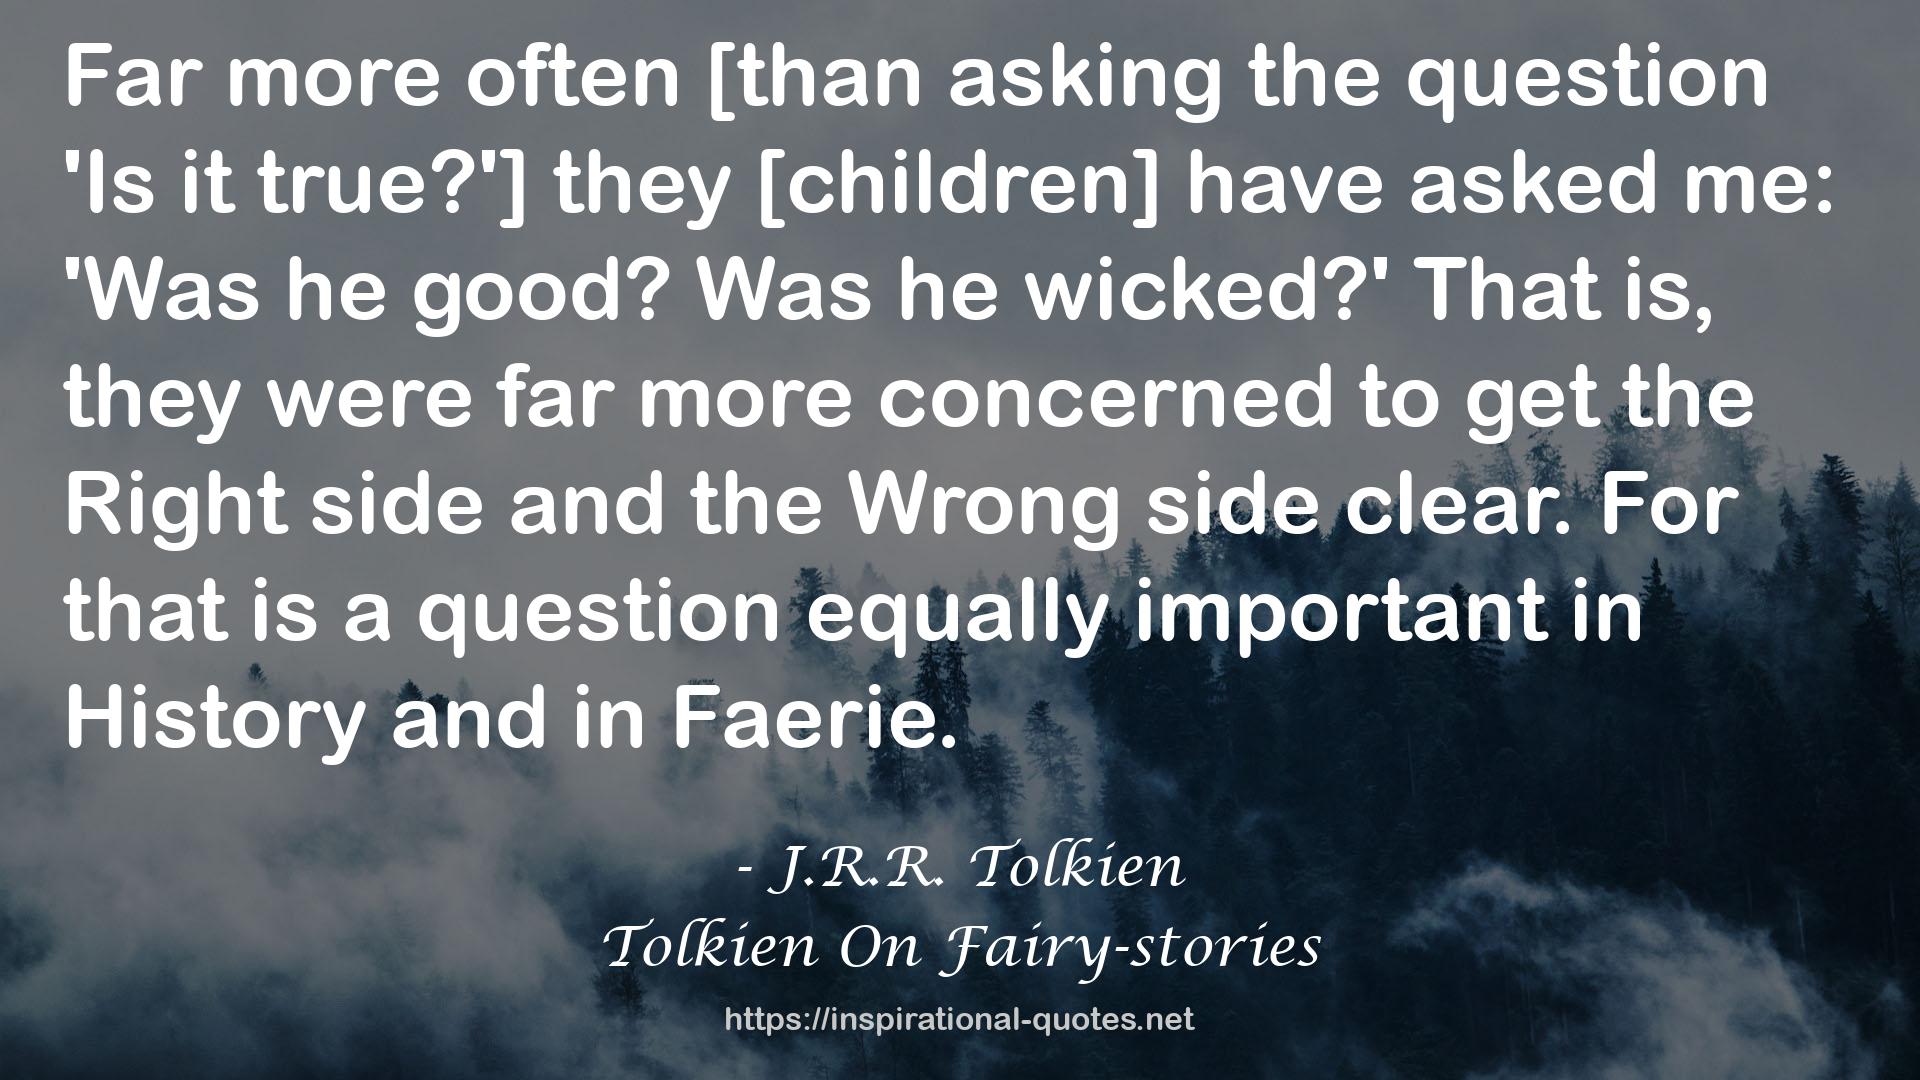 J.R.R. Tolkien QUOTES